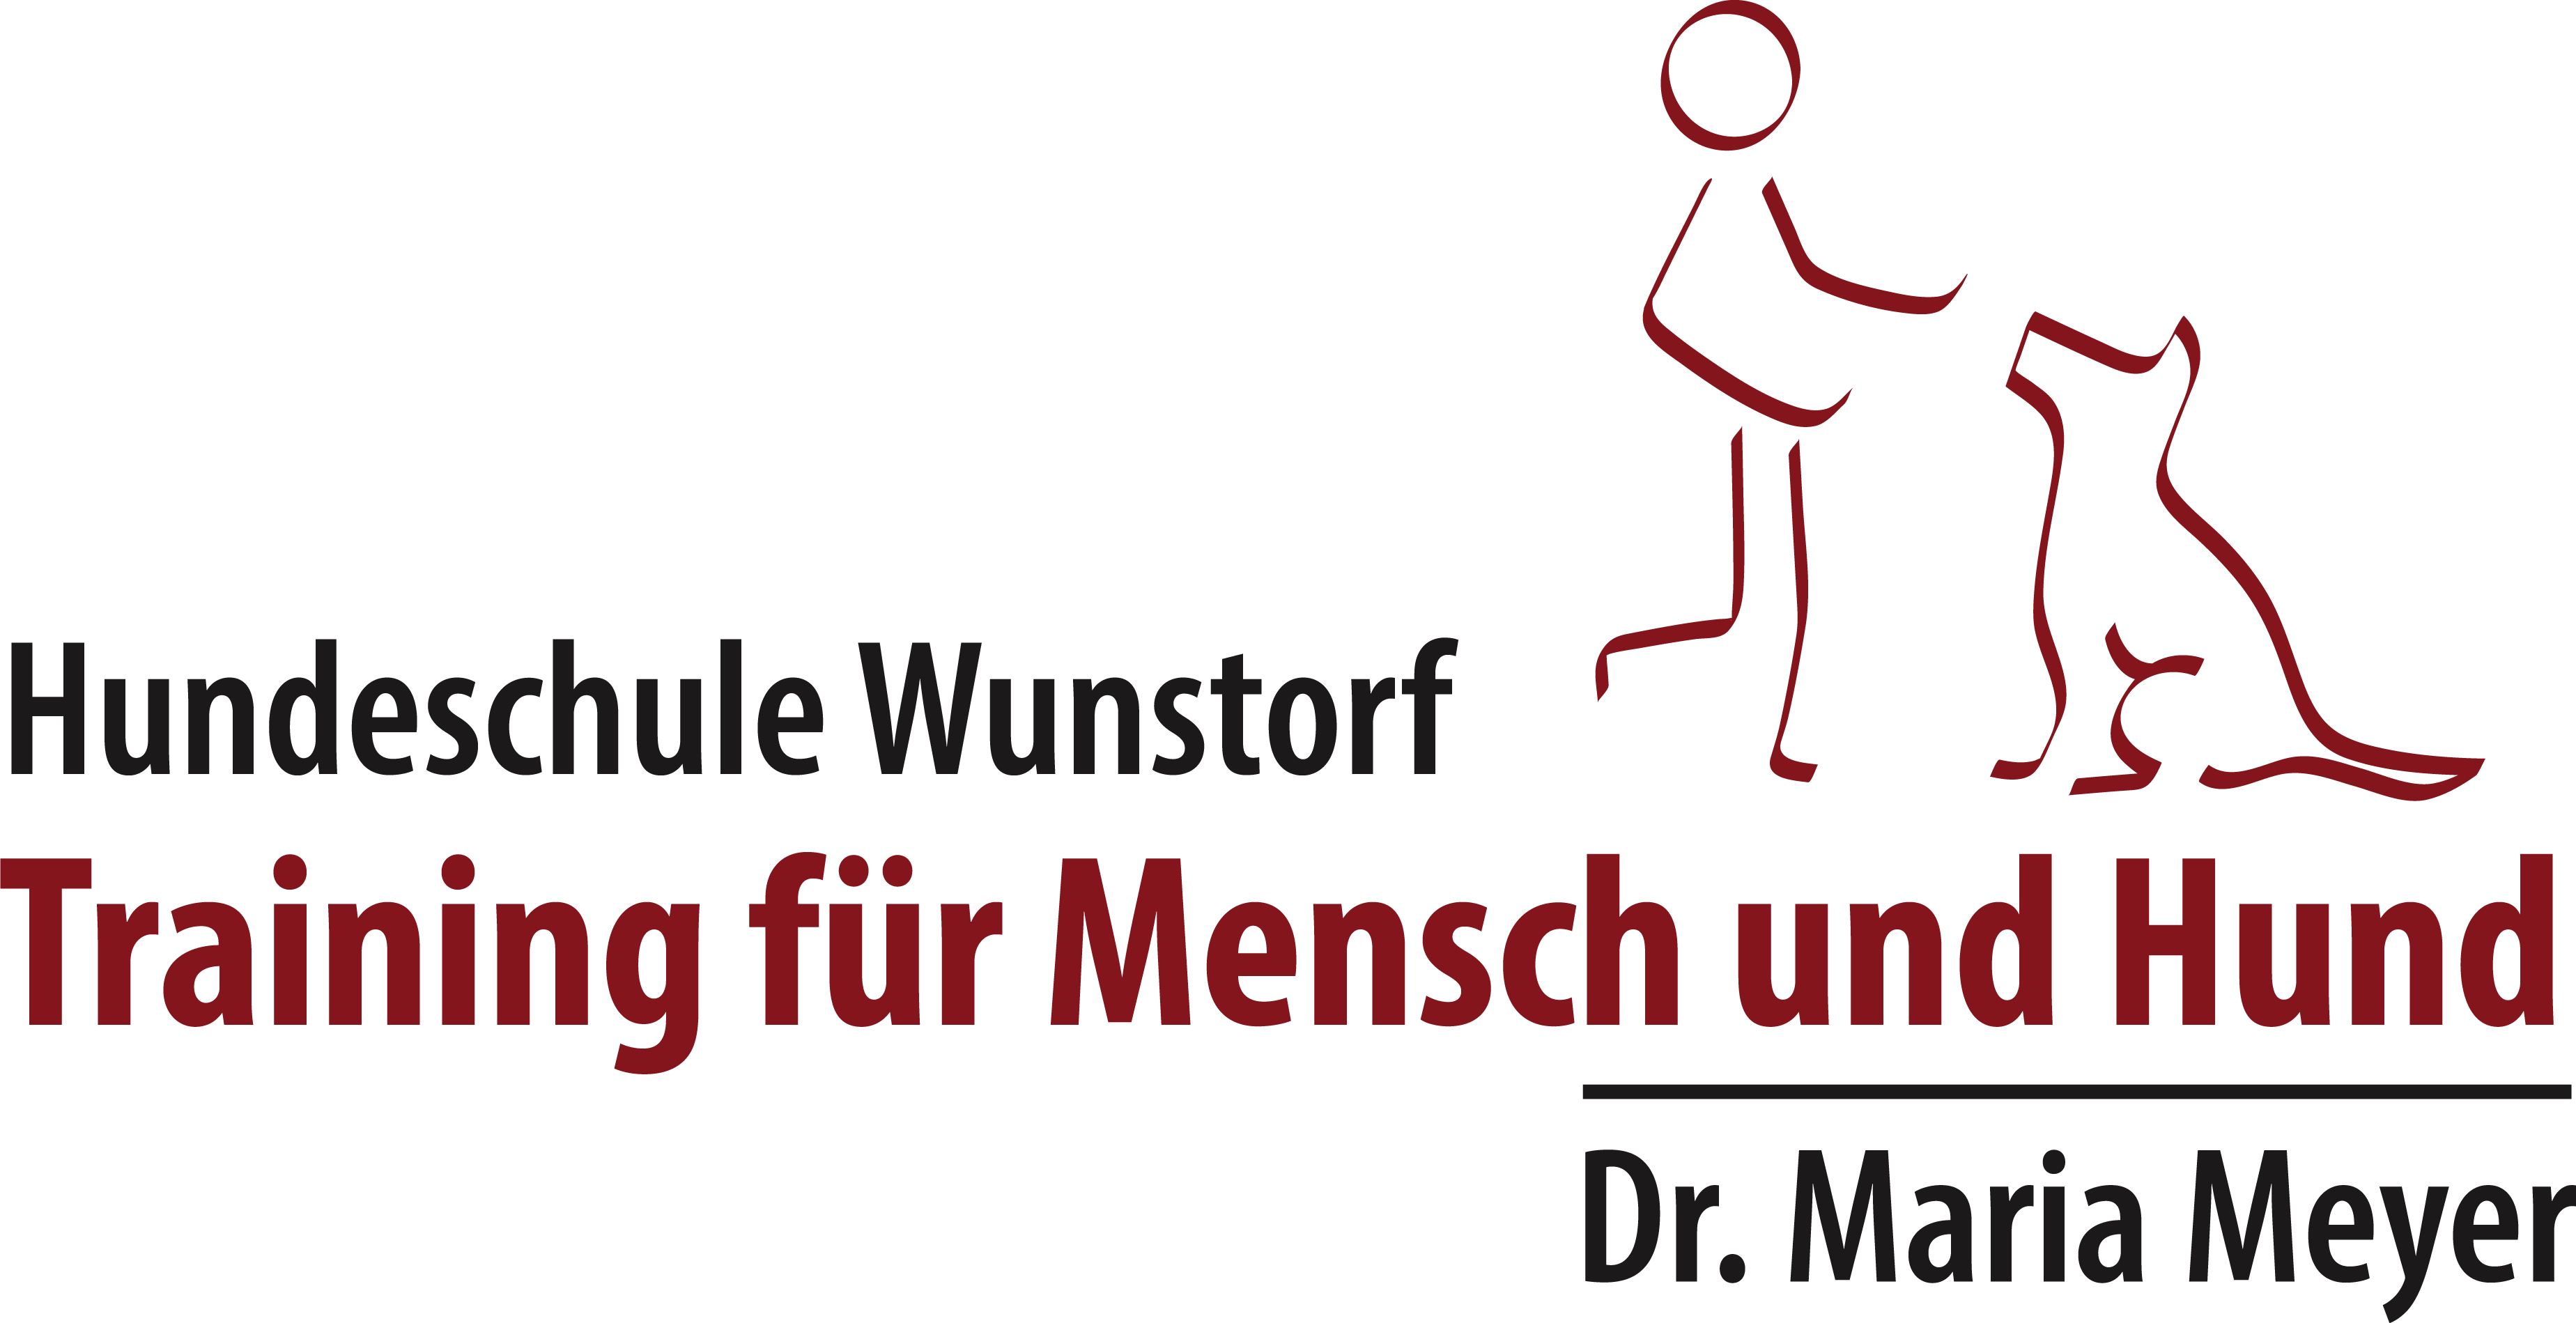 Hundeschule Wunstorf Logo